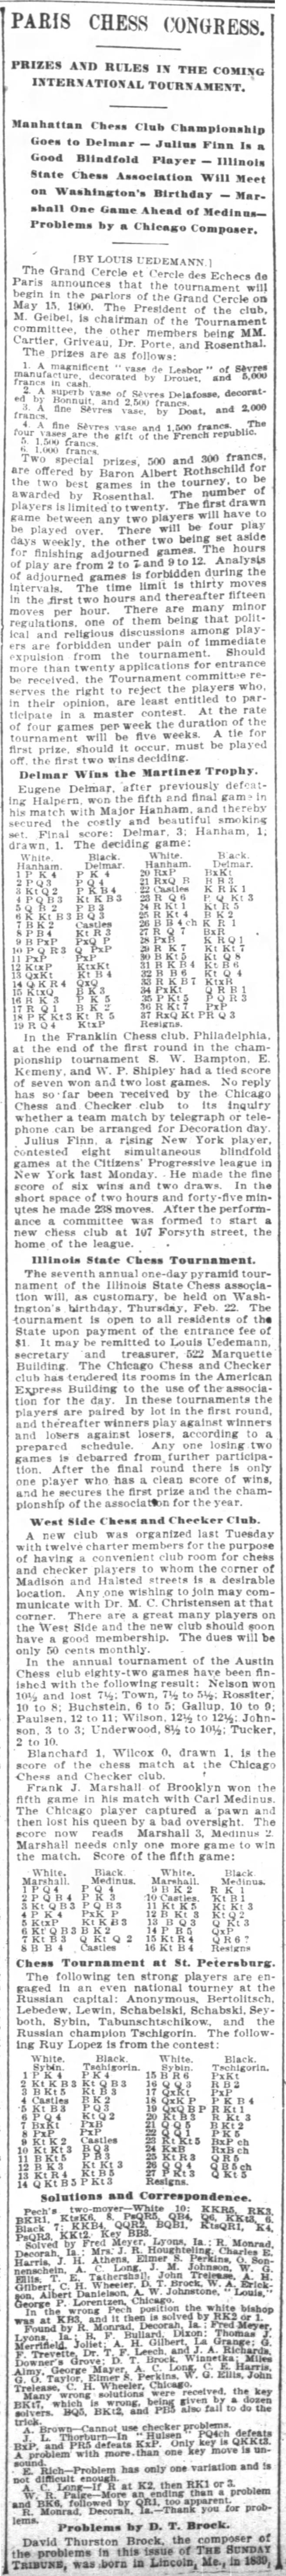 1900.02.11-01 Chicago Tribune.jpg